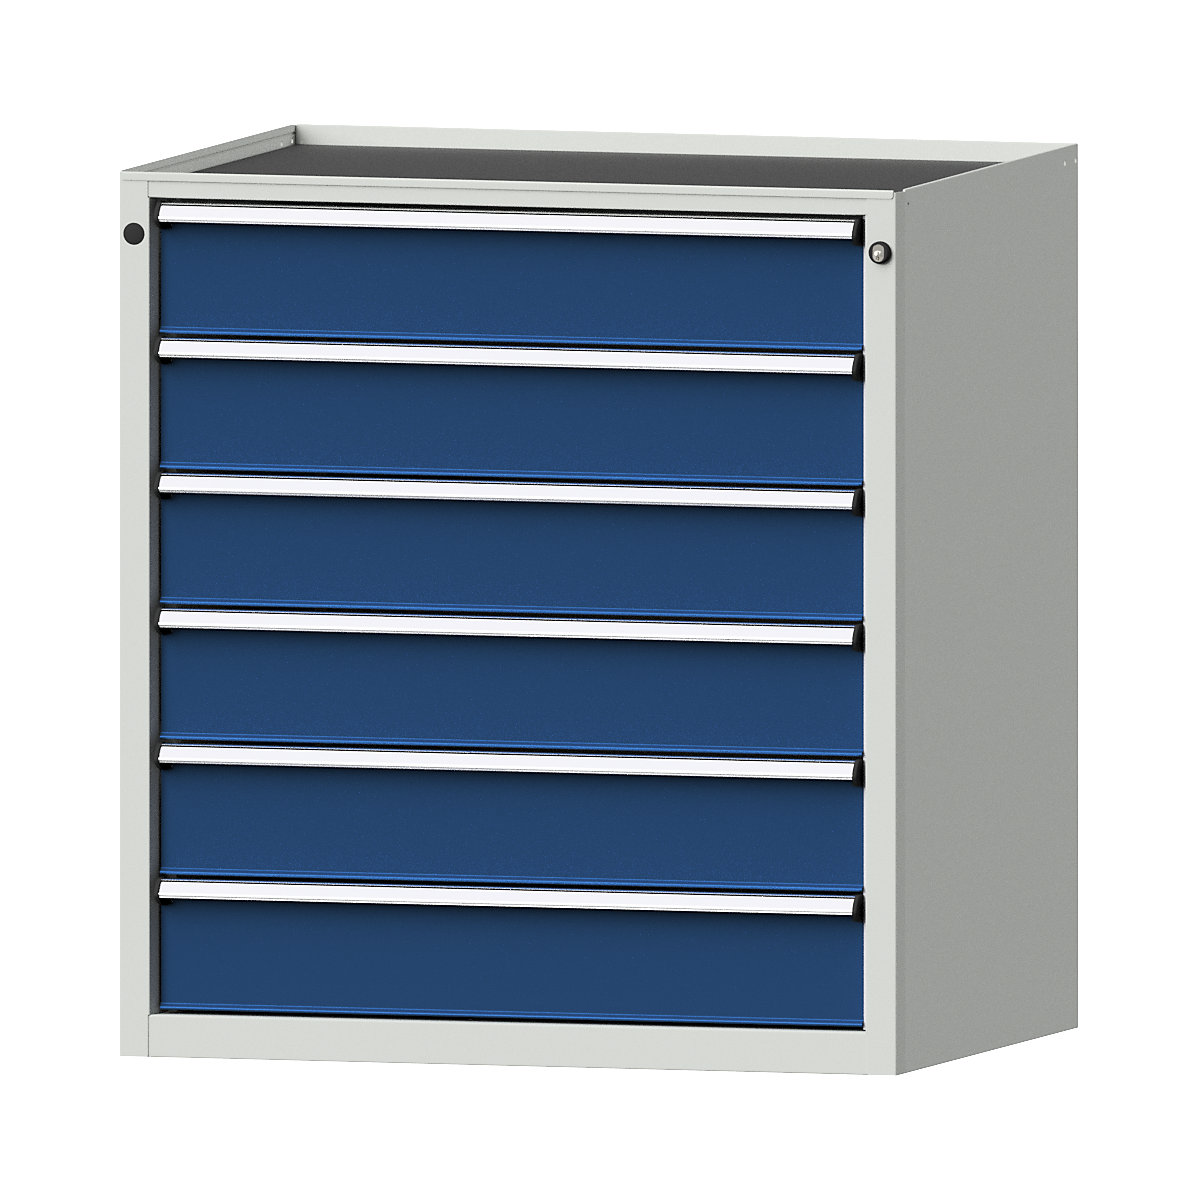 Armoire à tiroirs – ANKE, l x p 910 x 675 mm, 6 tiroirs, hauteur 980 mm, façade bleu gentiane-10